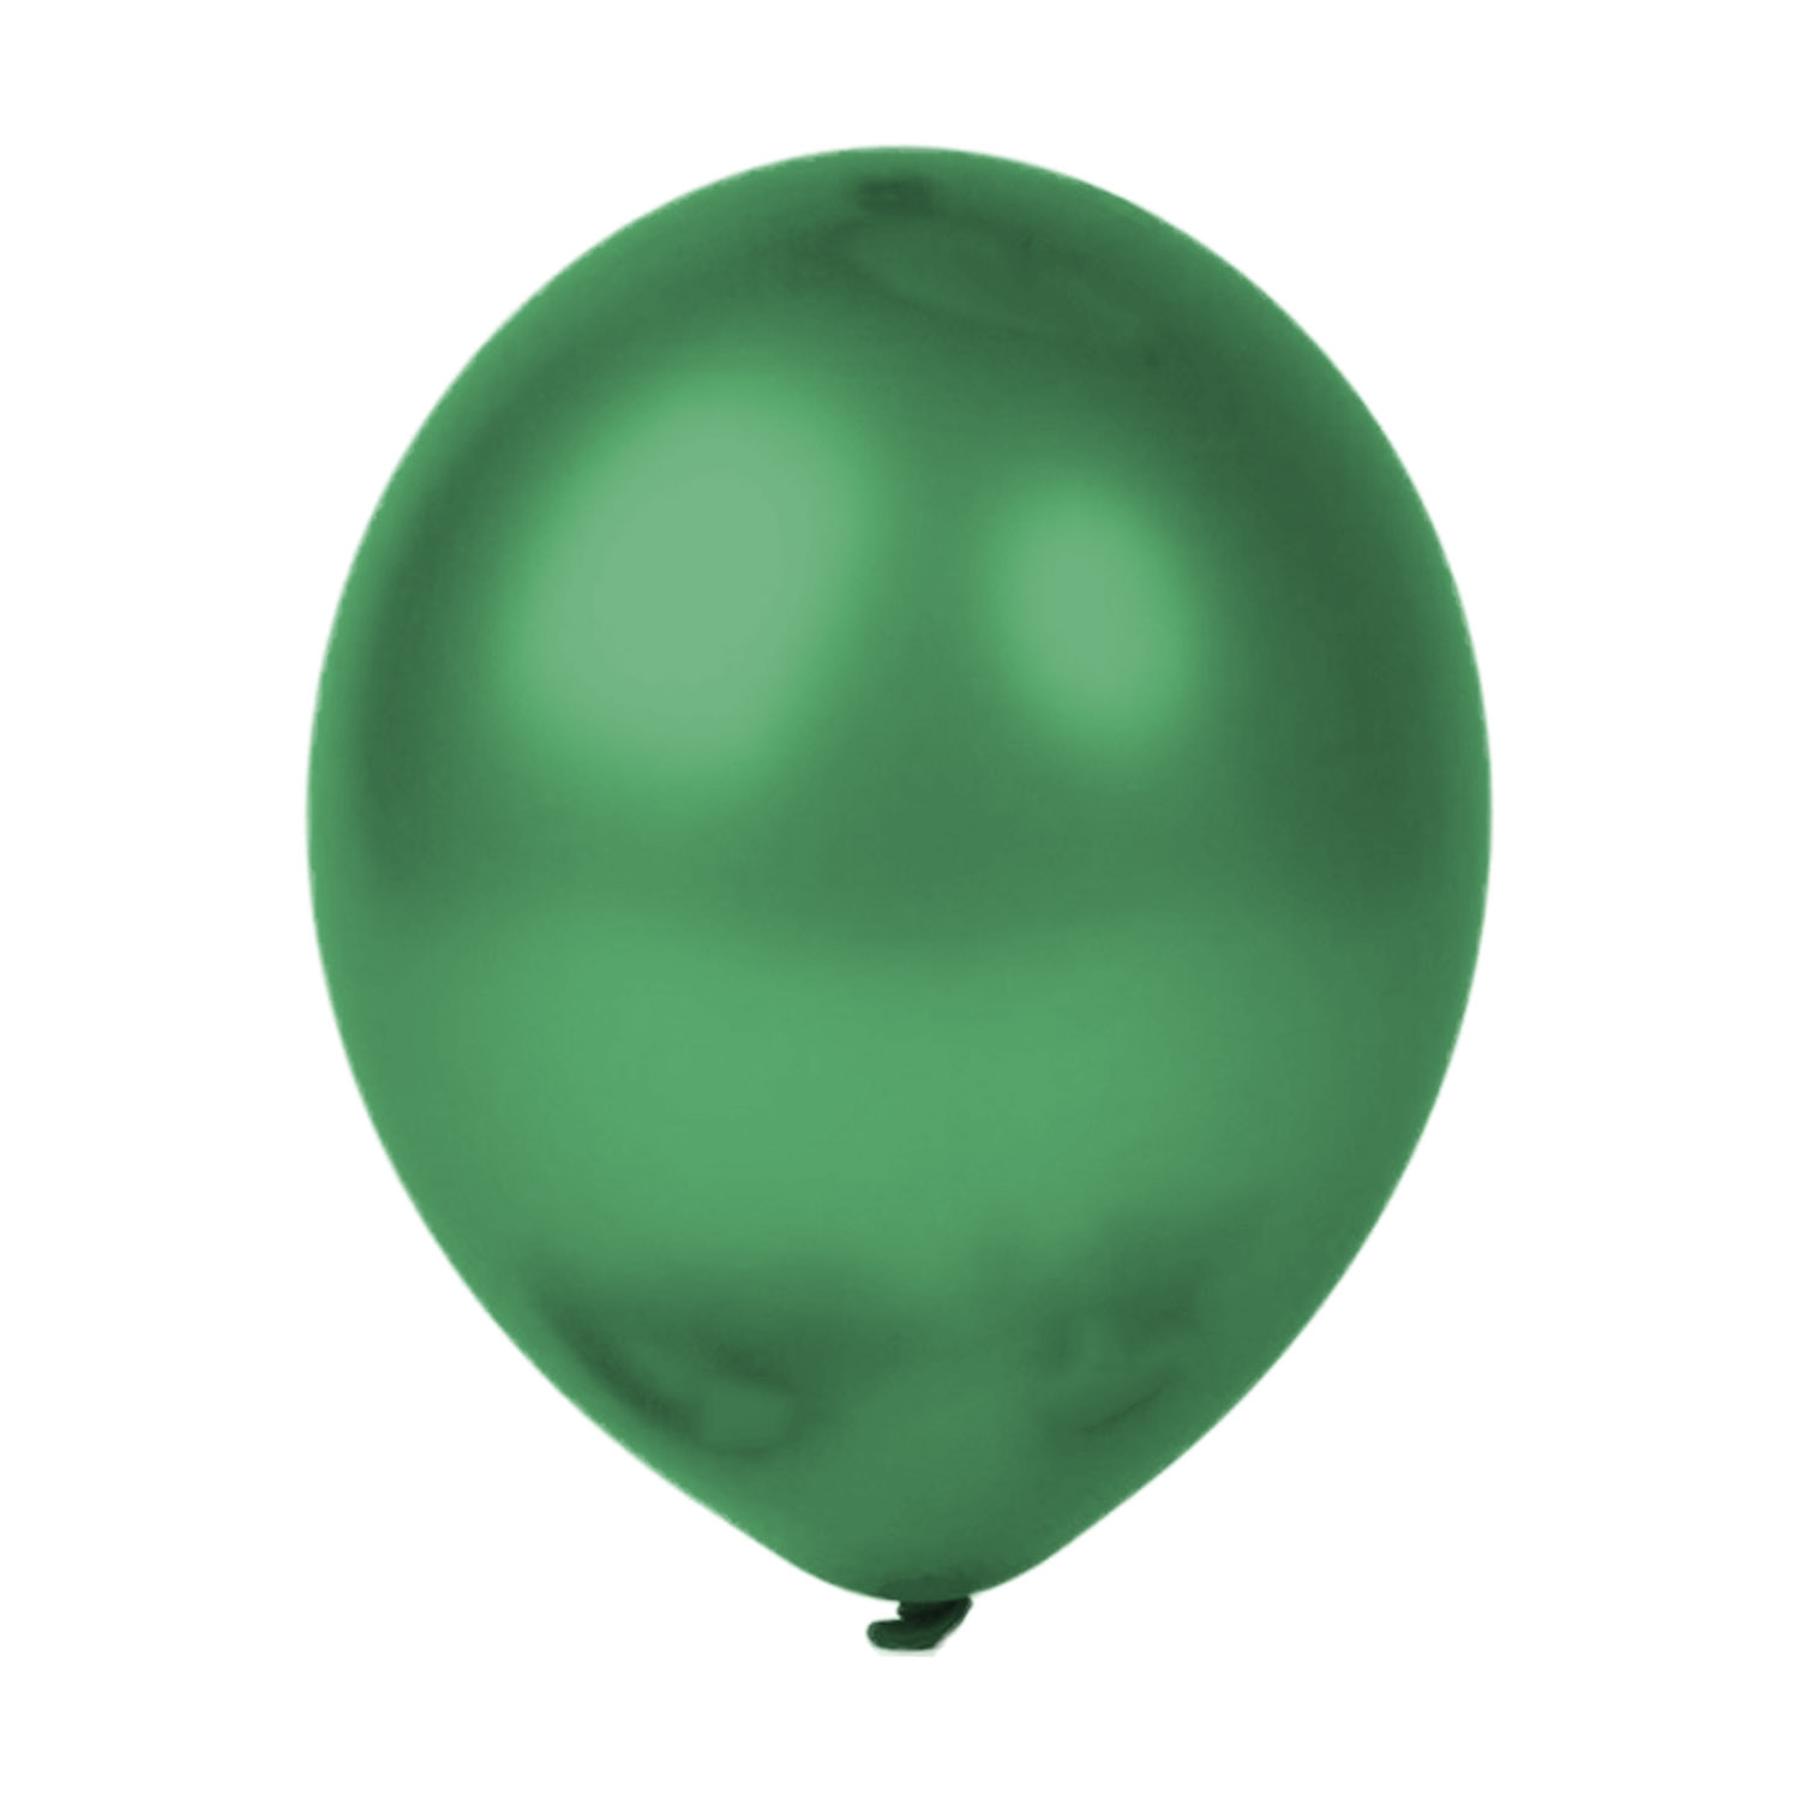 100er SET - Latex Luftballon - 12inch - Dunkelgrün - Metallic (glänzend)